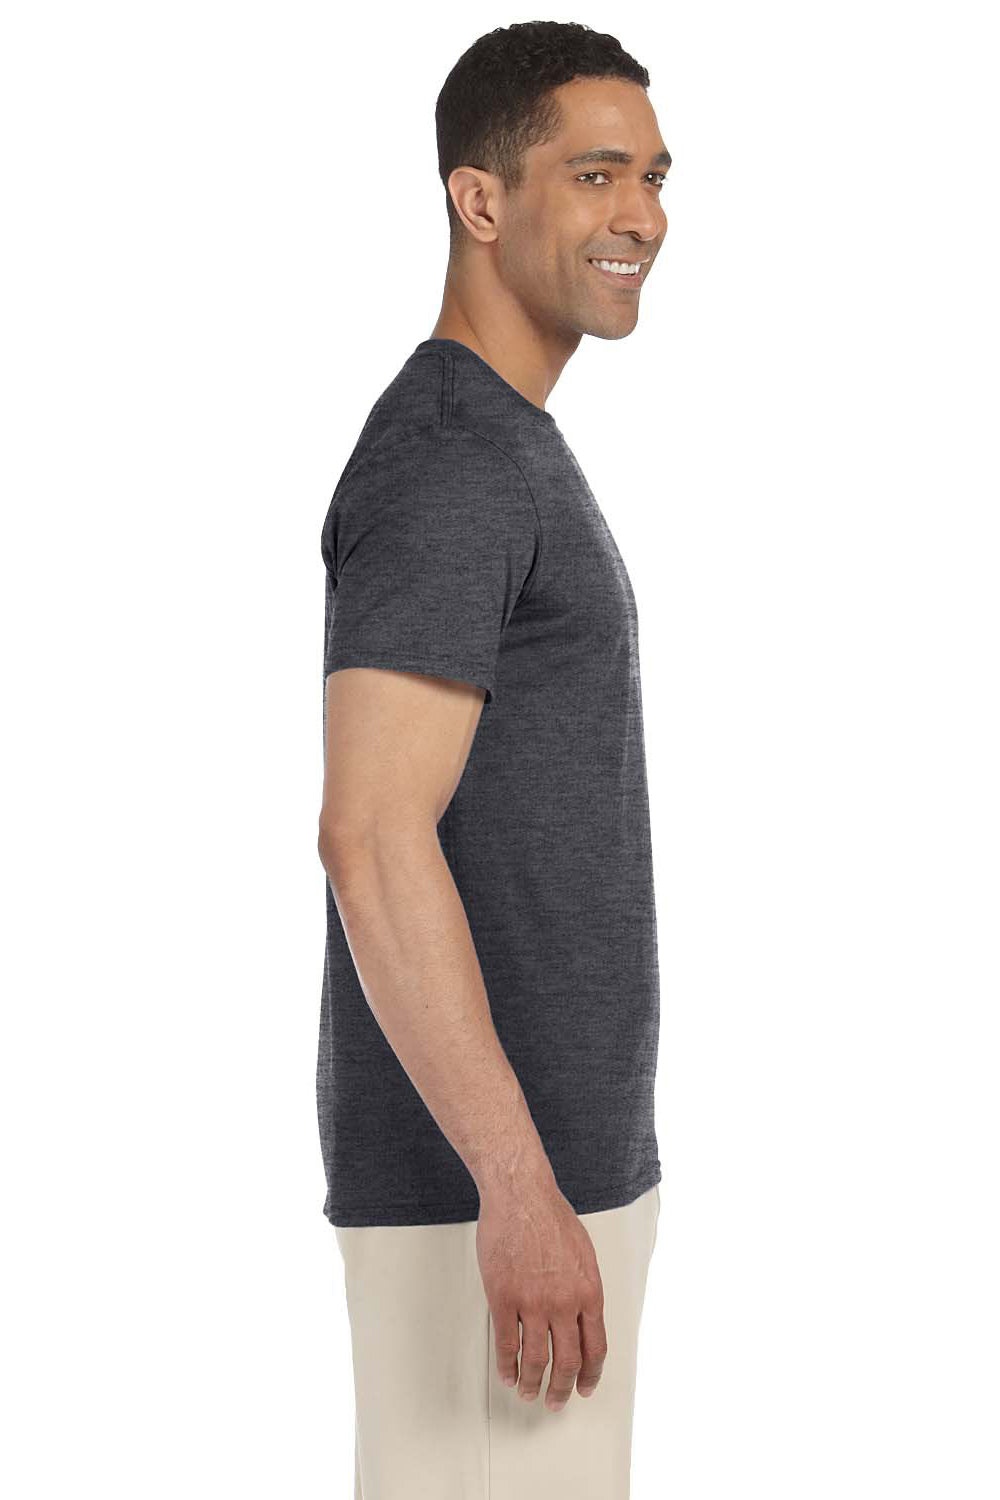 Gildan G640 Mens Softstyle Short Sleeve Crewneck T-Shirt Heather Dark Grey Side